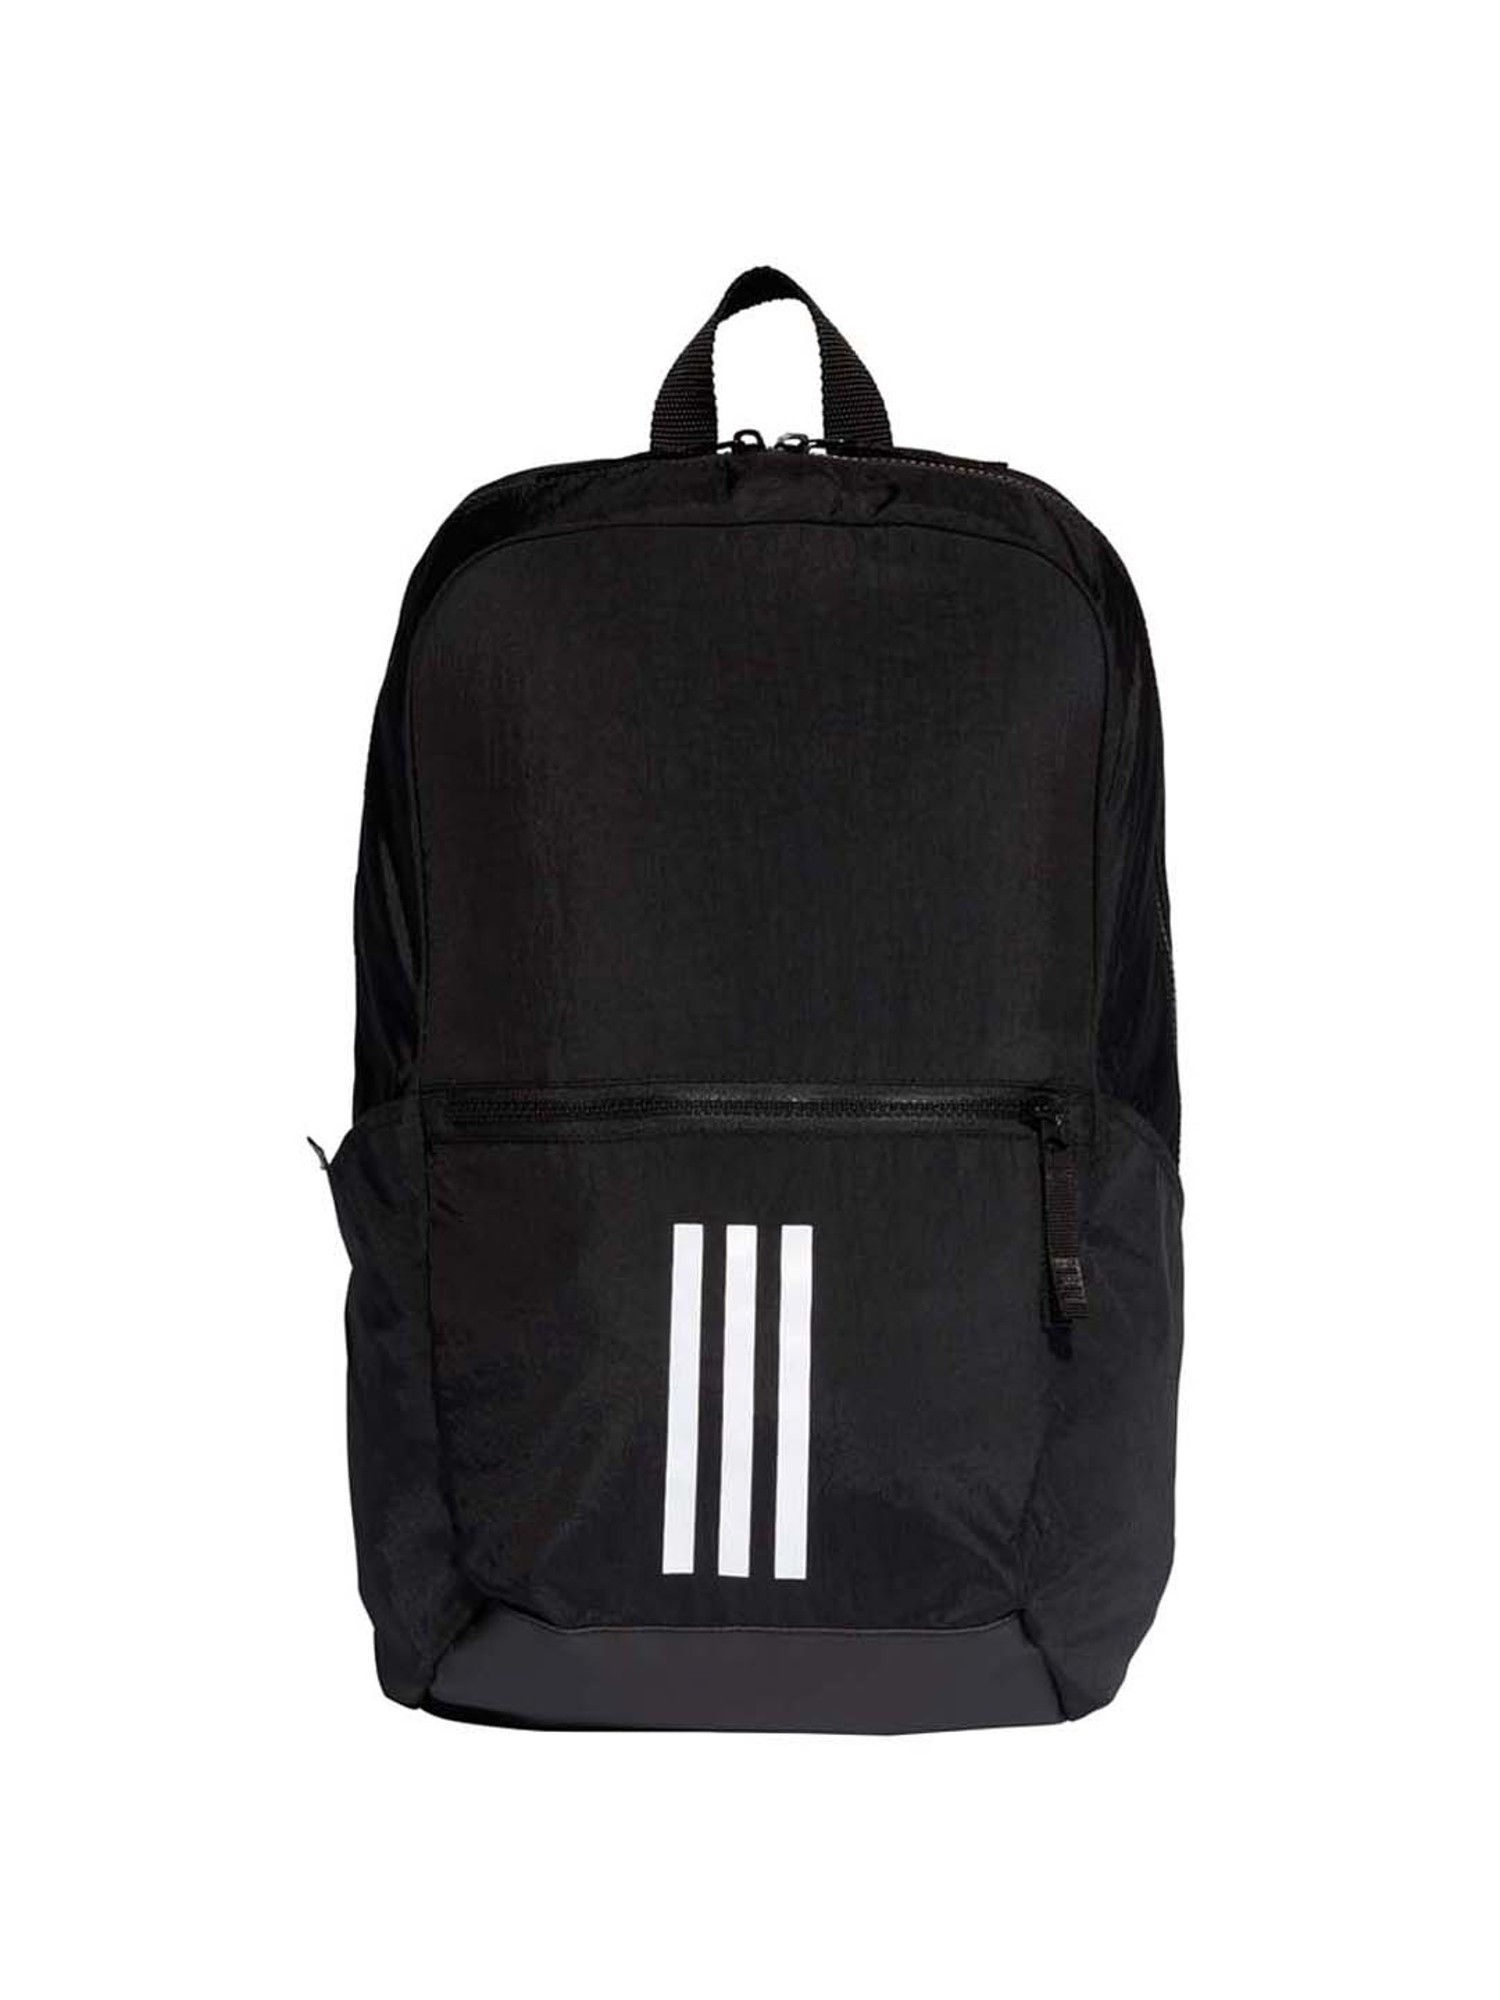 Buy Adidas Black Medium Backpack Online At Best Price @ Tata Cliq